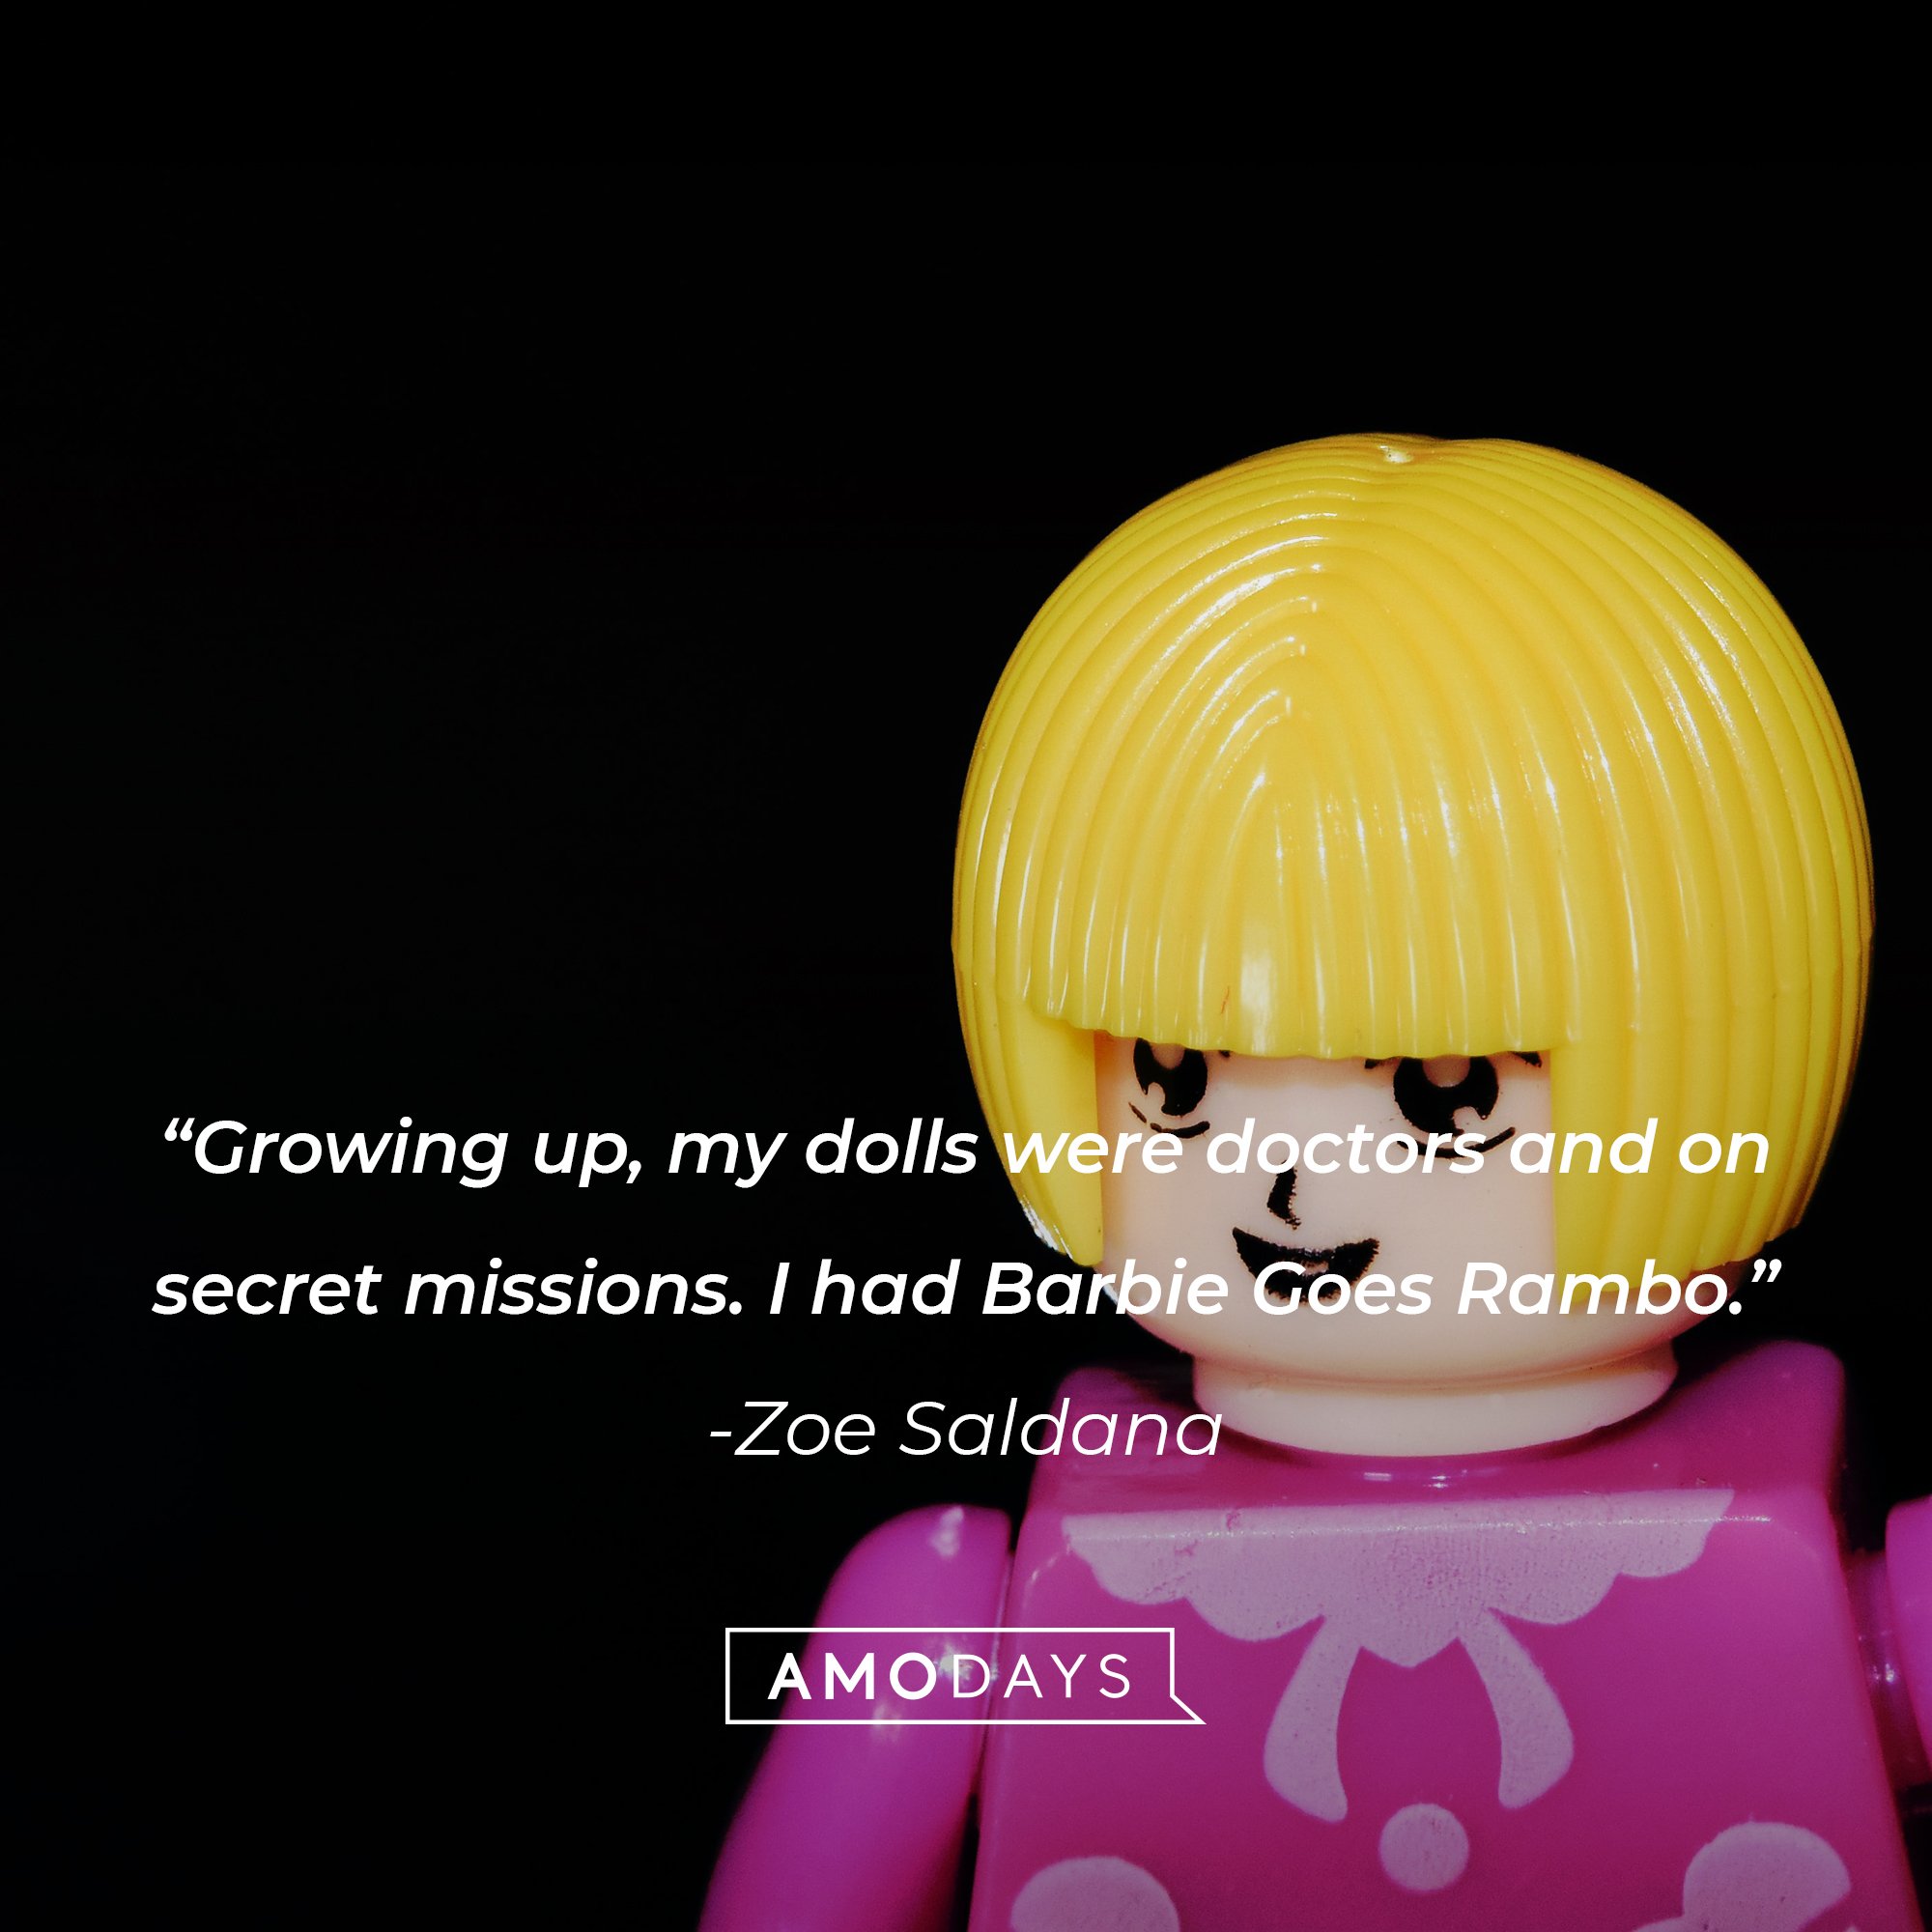 Zoe Saldana's quote: "Growing up, my dolls were doctors and on secret missions. I had Barbie Goes Rambo." | Image: AmoDays